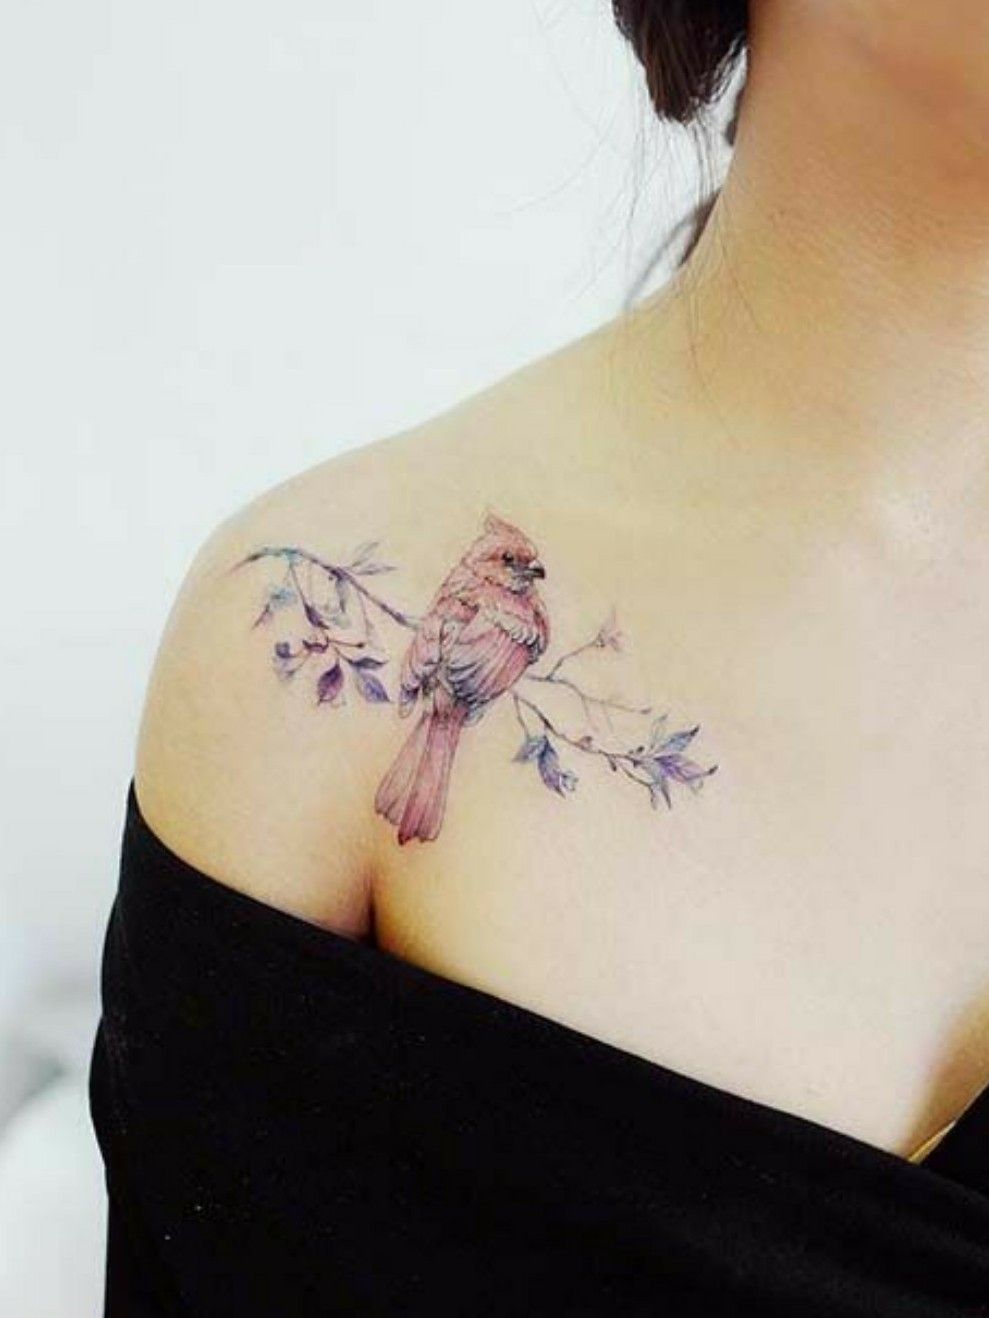 Tattoo tagged with jayshin small cardinal animal tiny bird ifttt  little medium size illustrative upper arm  inkedappcom